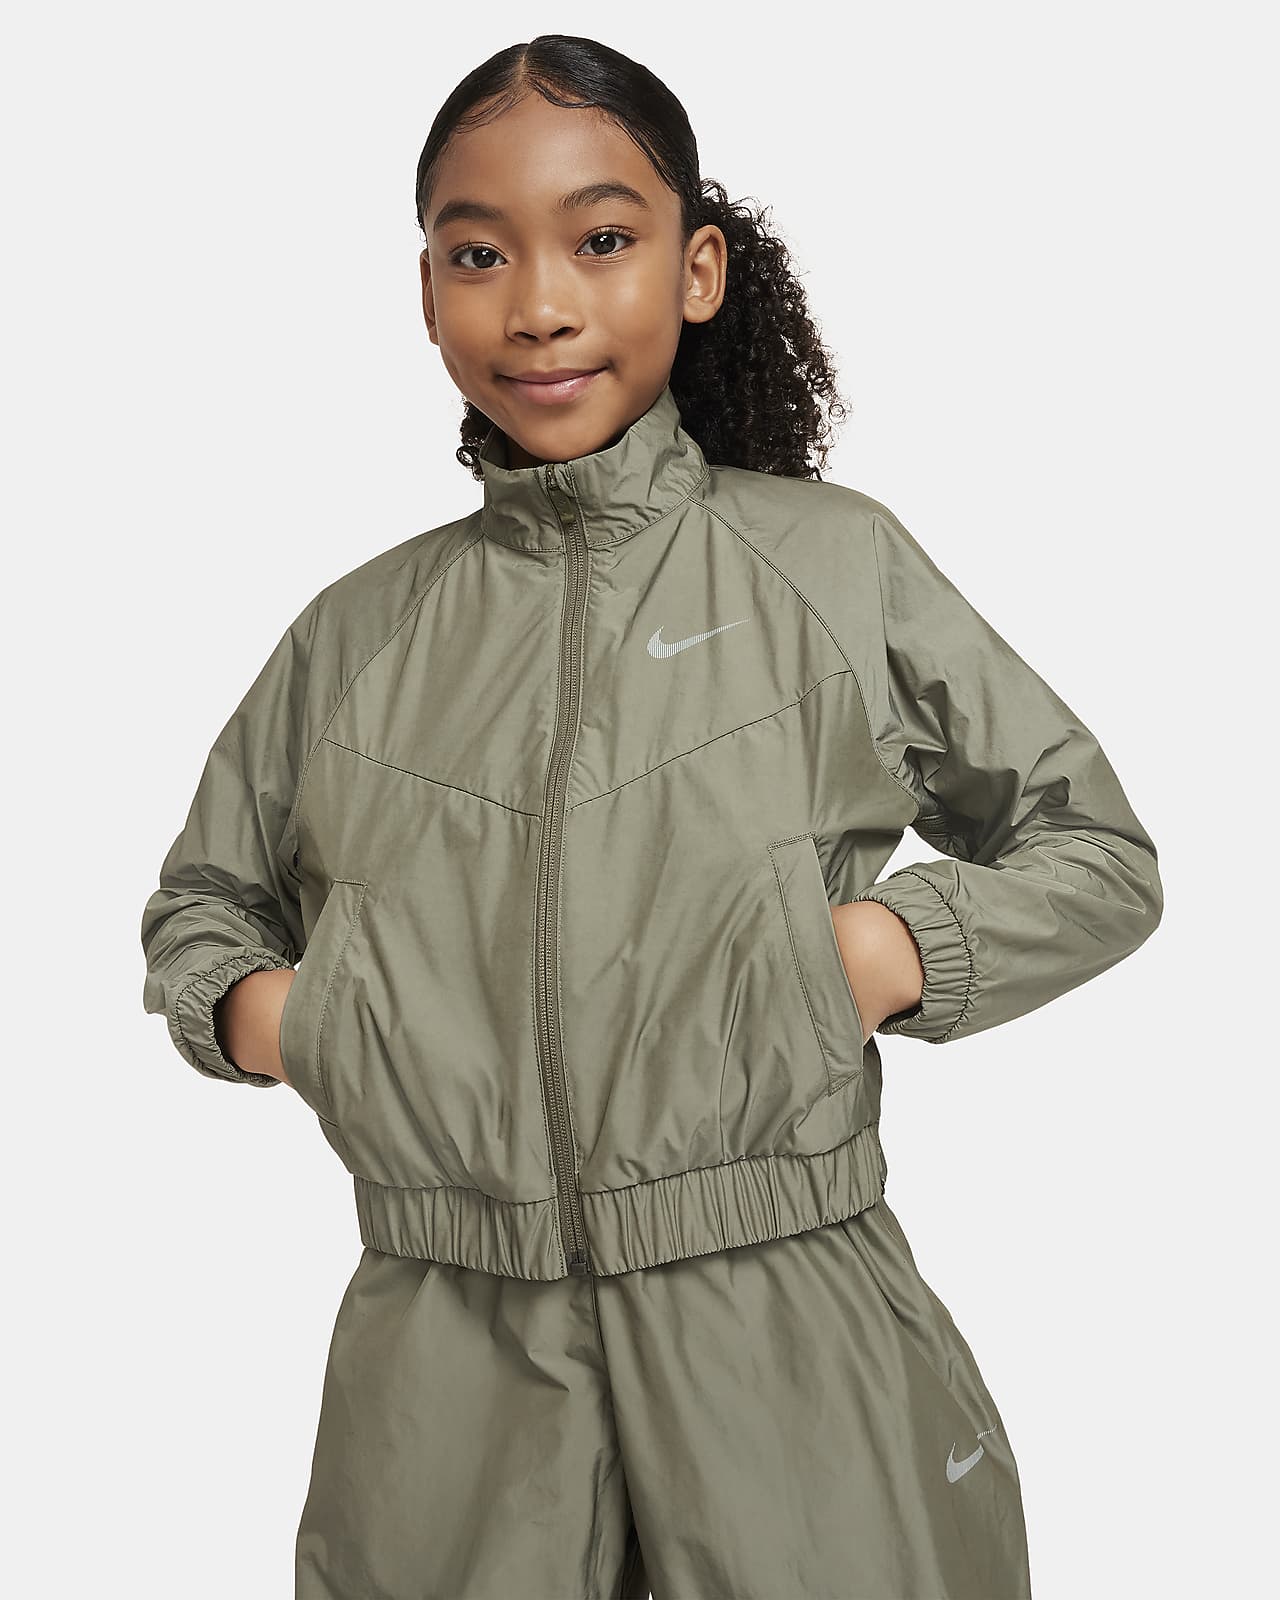 Loose Windrunner Sportswear (Girls\') Jacket. Big Nike Kids\'